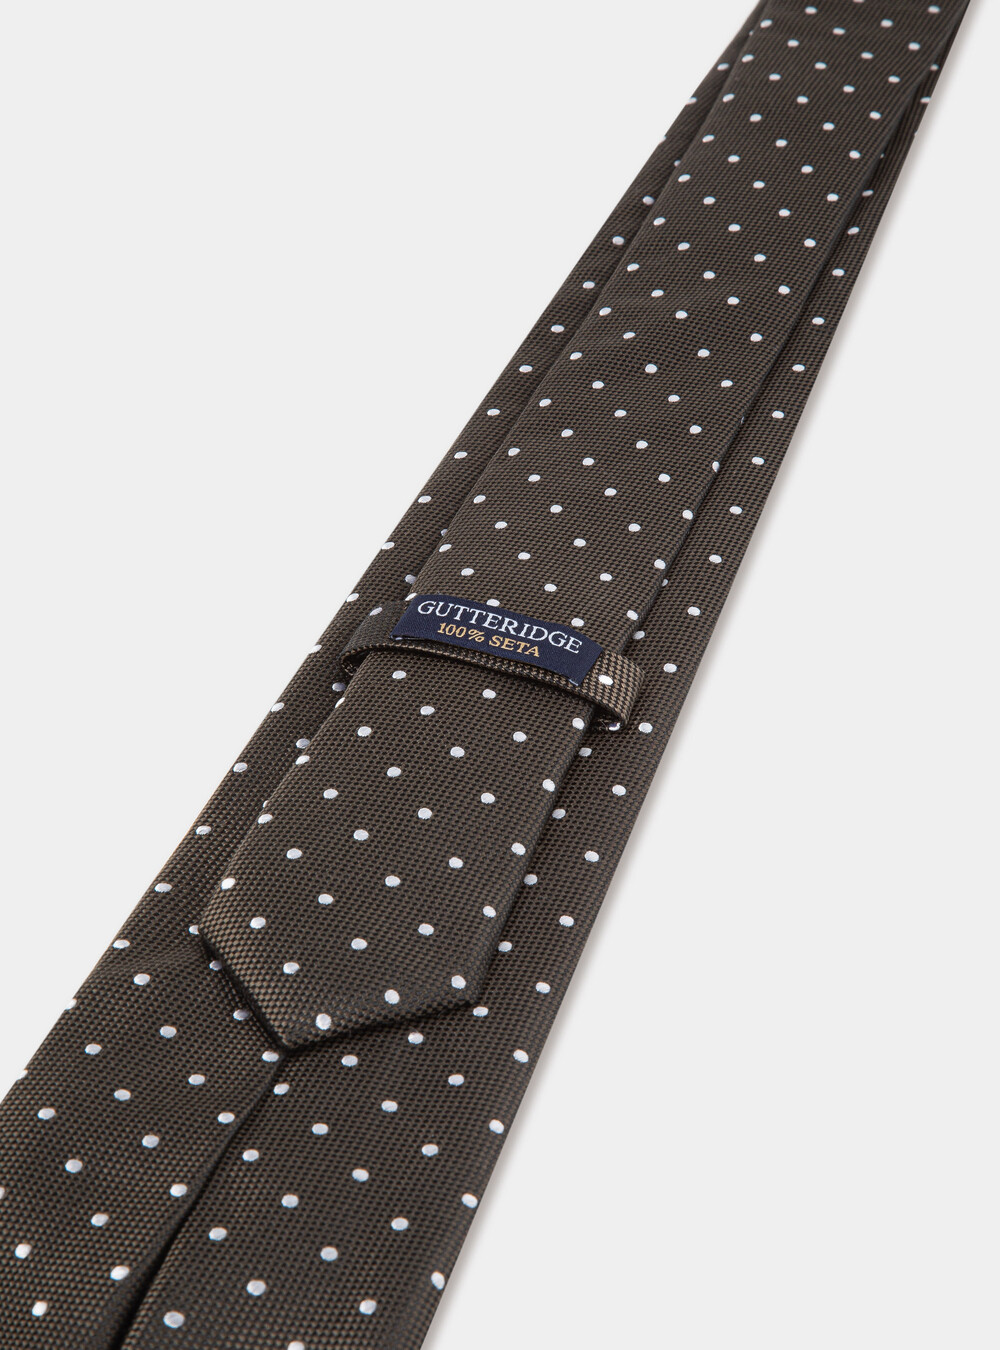 Cravatte Da Uomo | Gutteridge 1878 | Vendita Cravatte Da Uomo